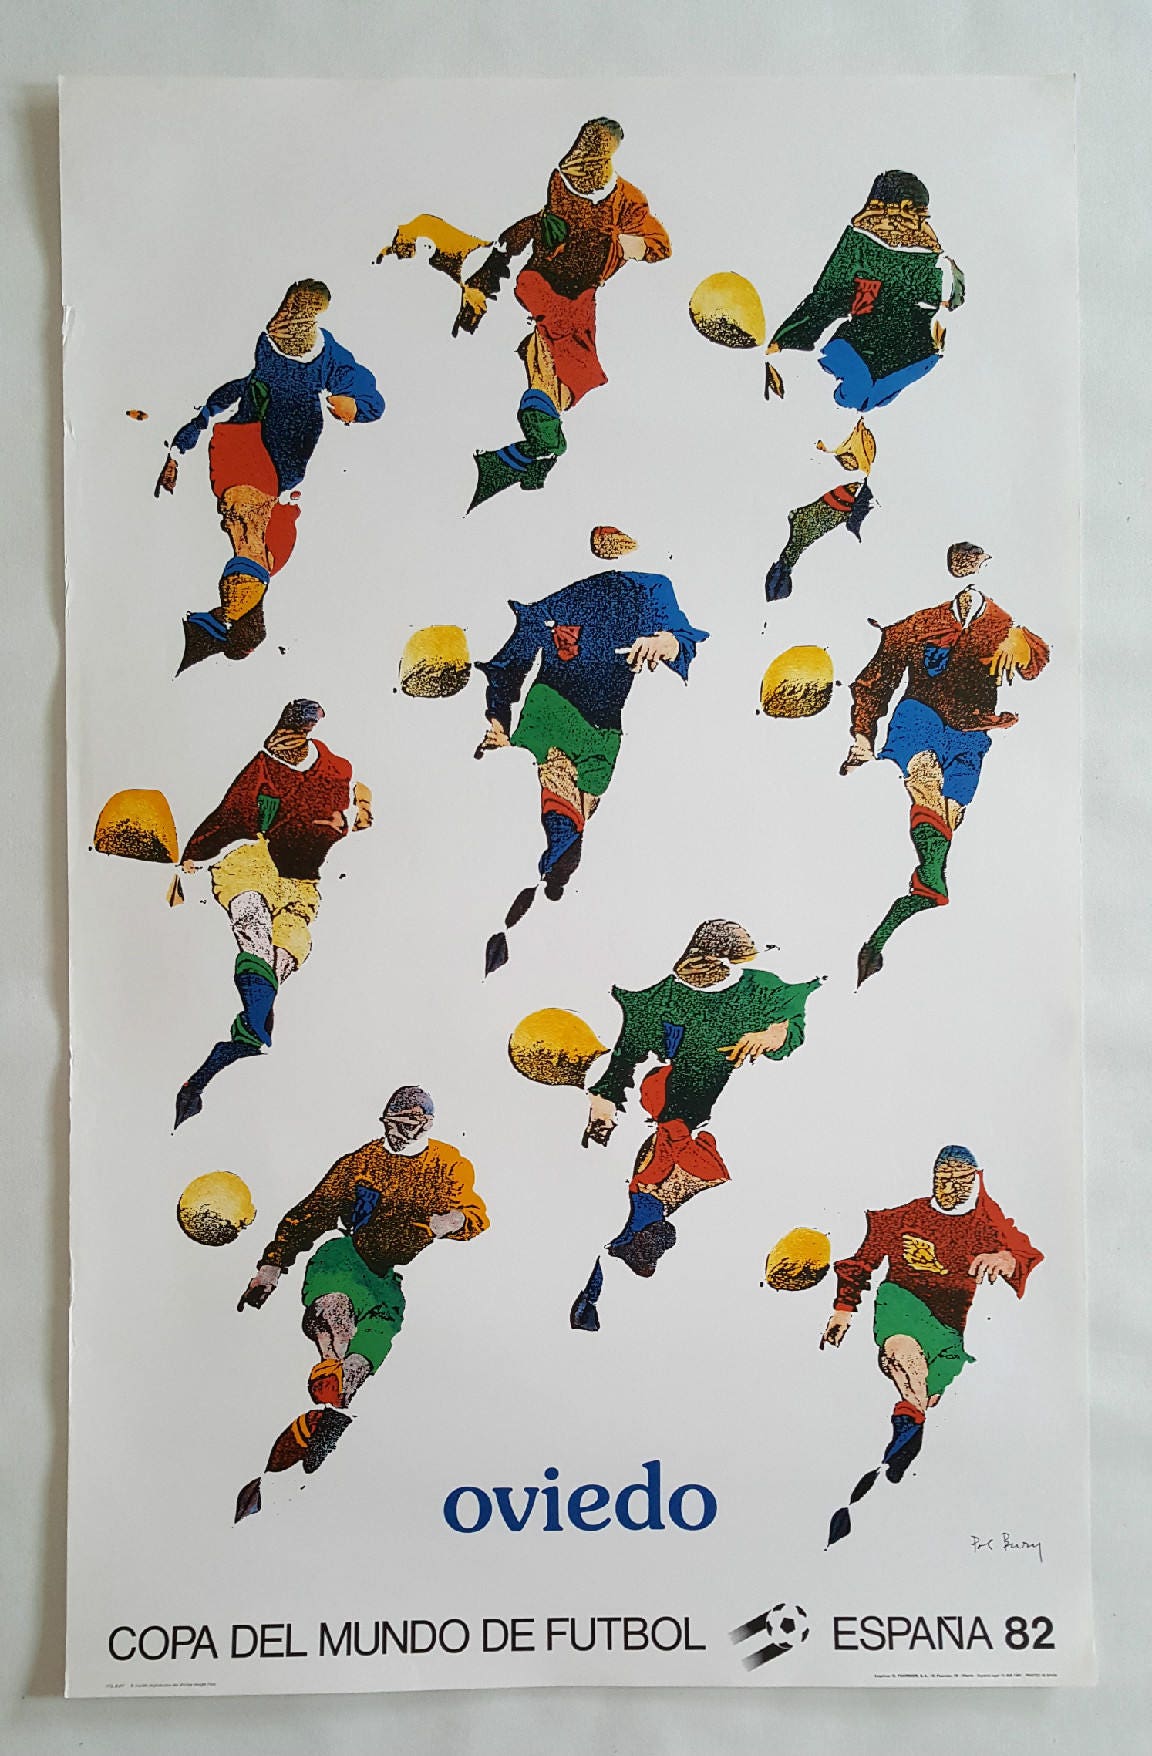 1982 World Cup Spain (Oviedo) - Original Vintage Poster